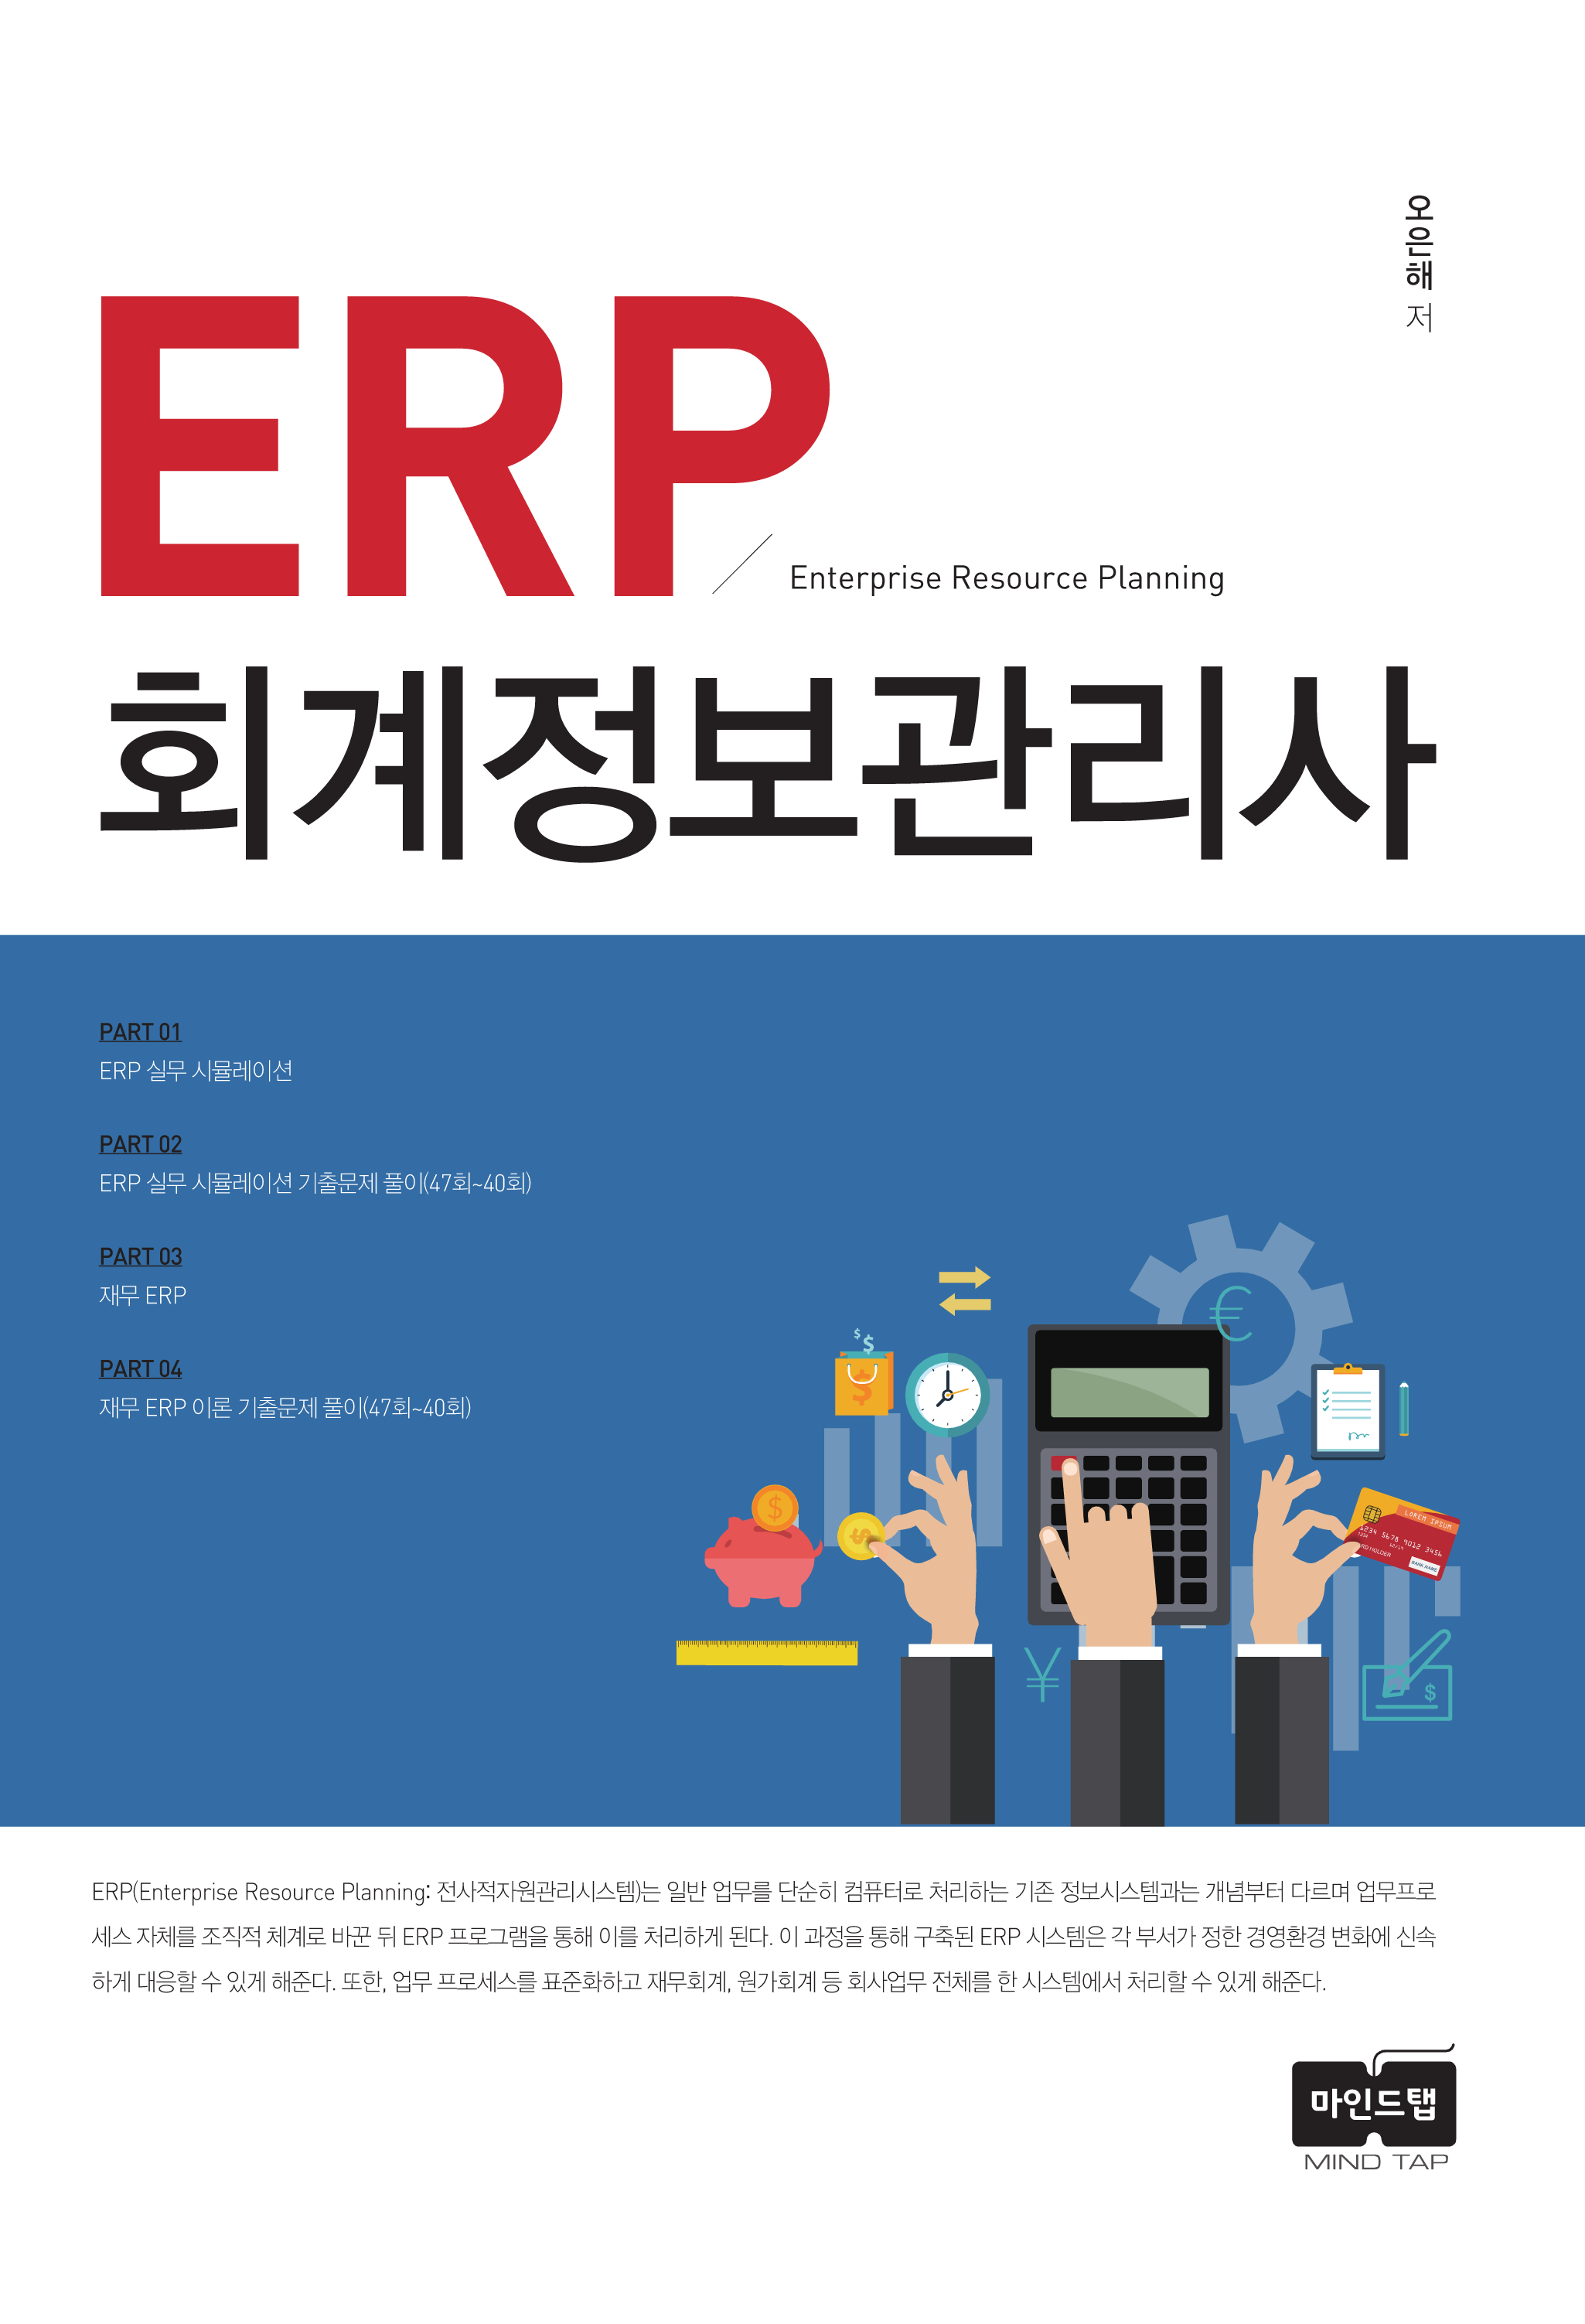 ERP 회계정보관리사